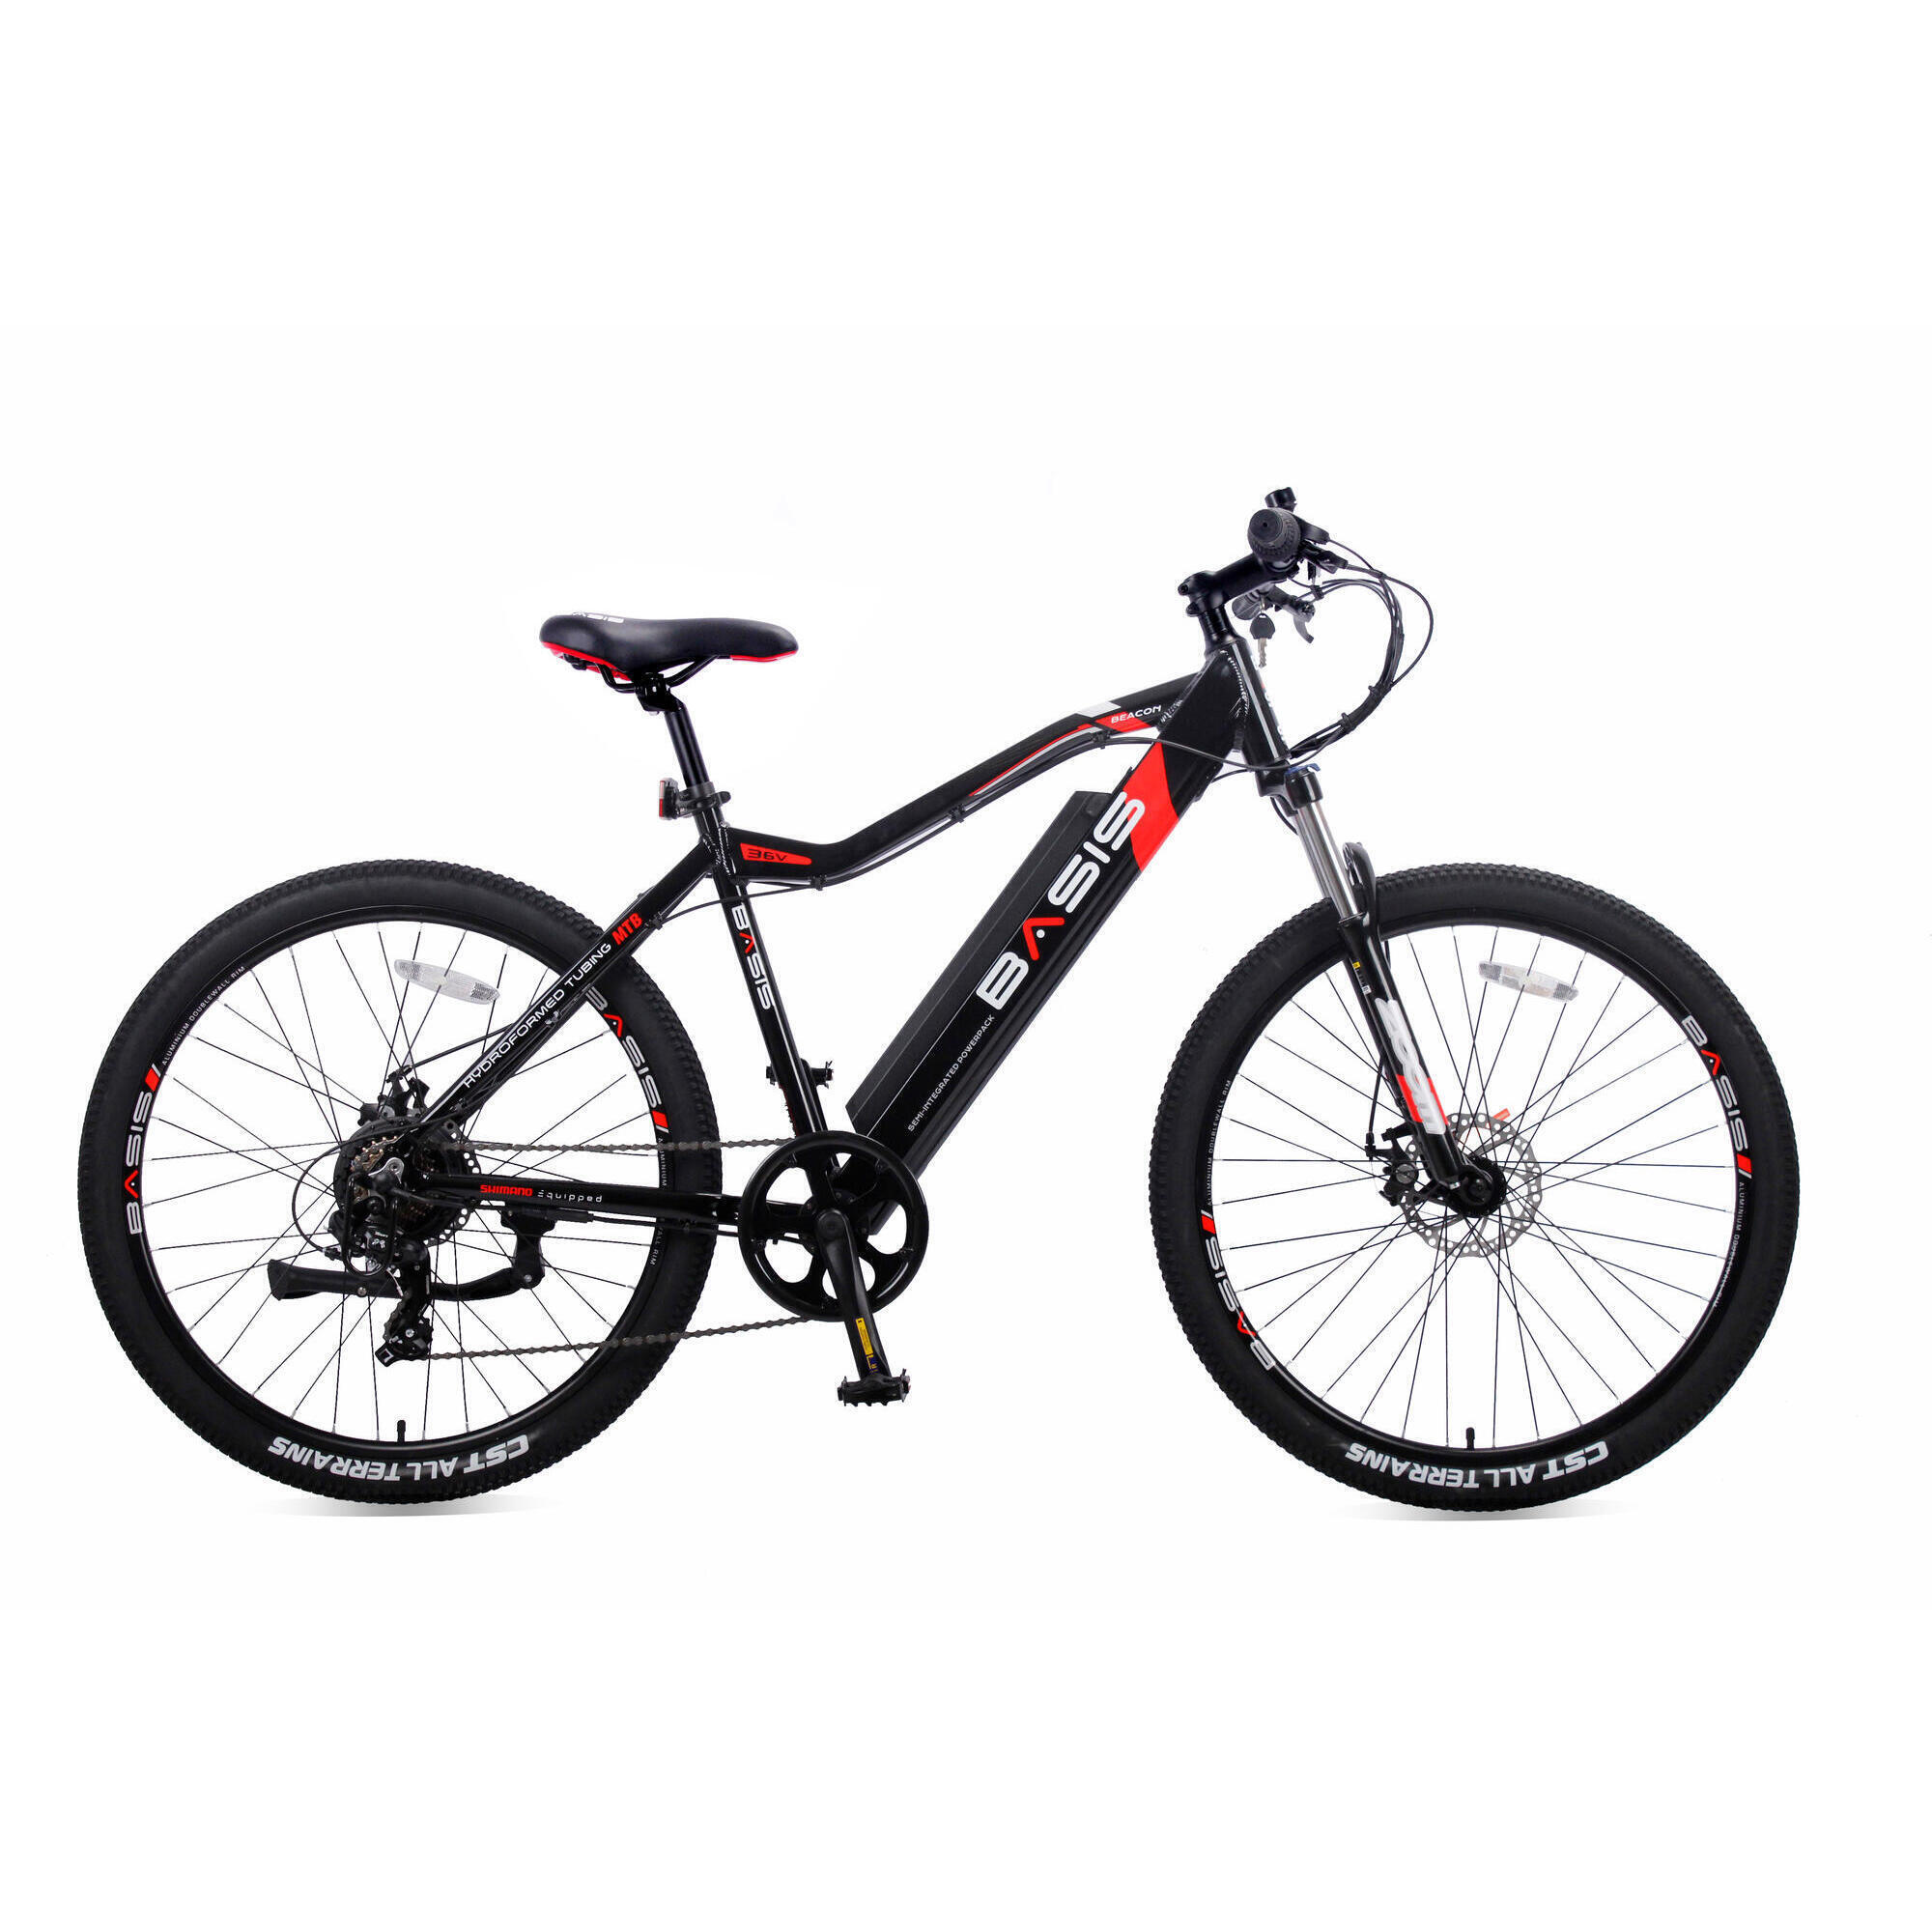 Basis Beacon Hardtail Electric Mountain bike, 8.8Ah - Black/Red 1/5